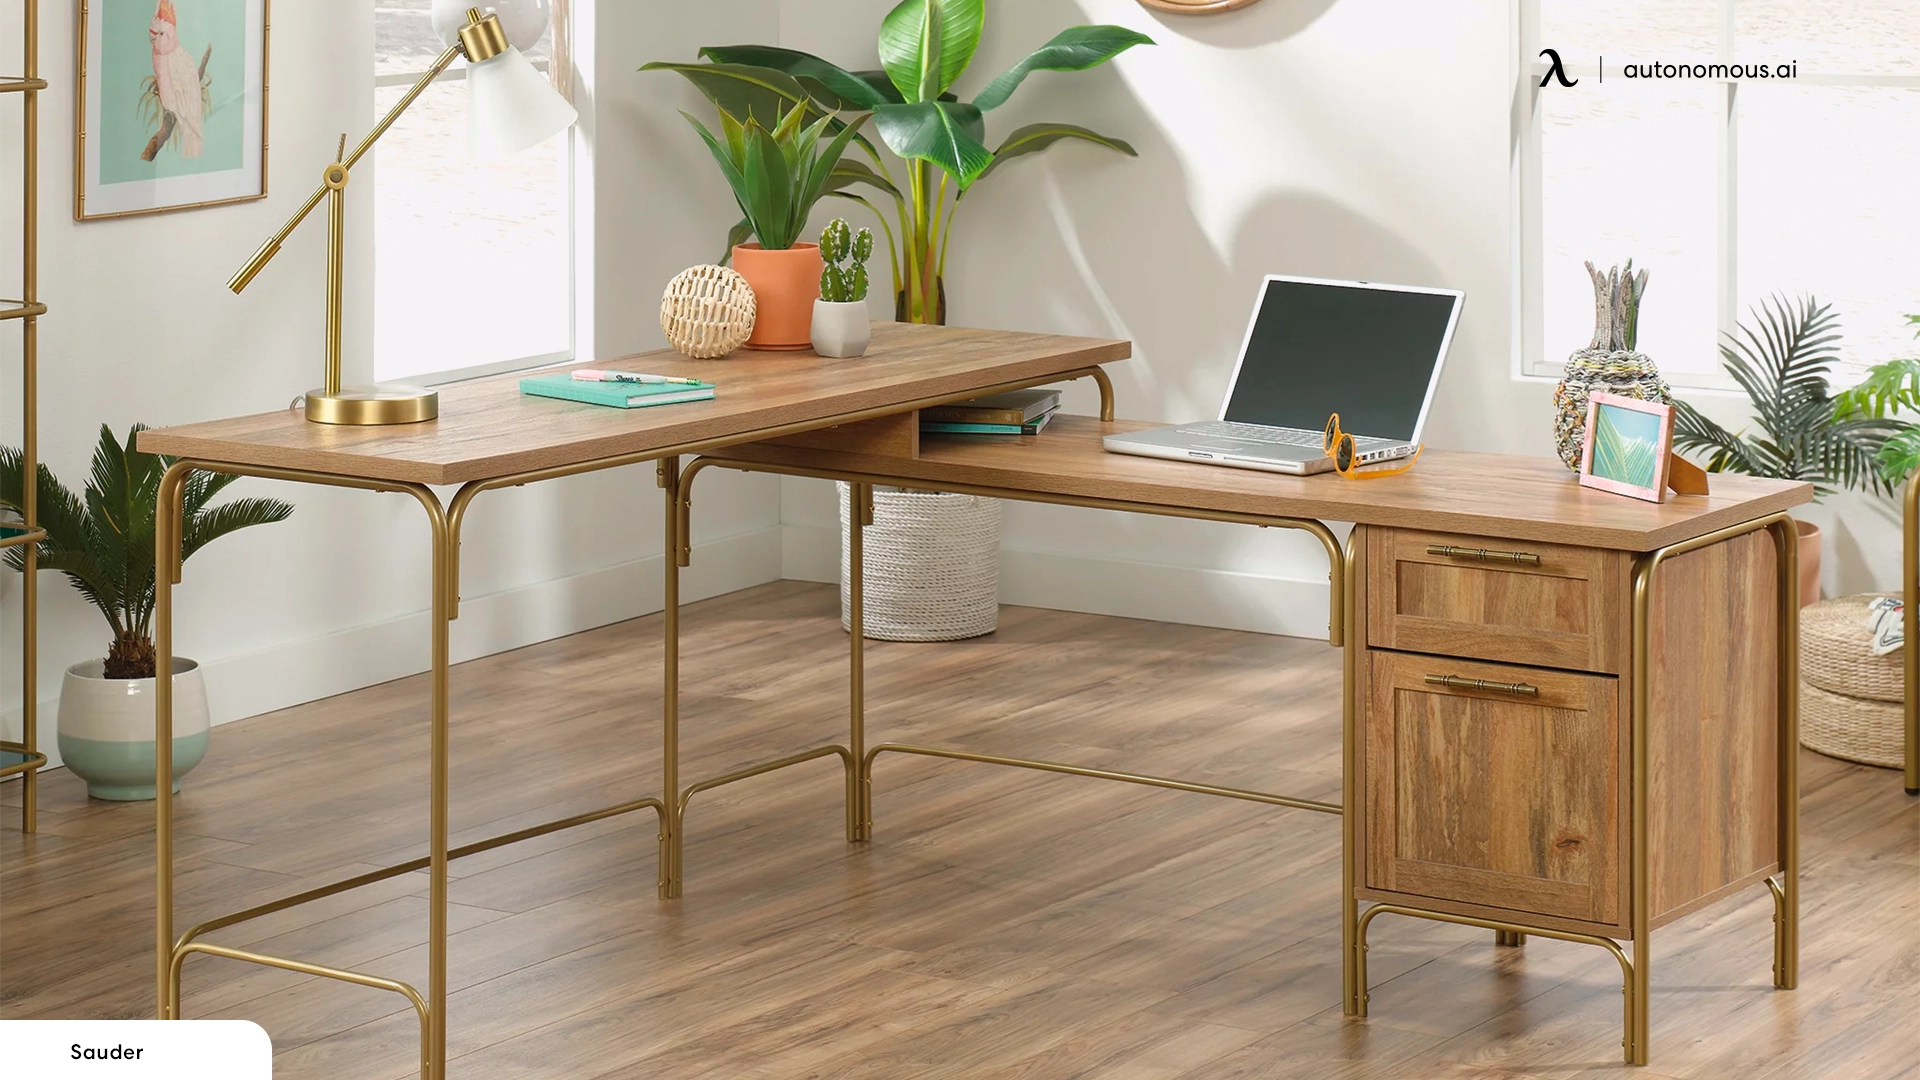 The Versatility of L-Shaped Wooden Desks